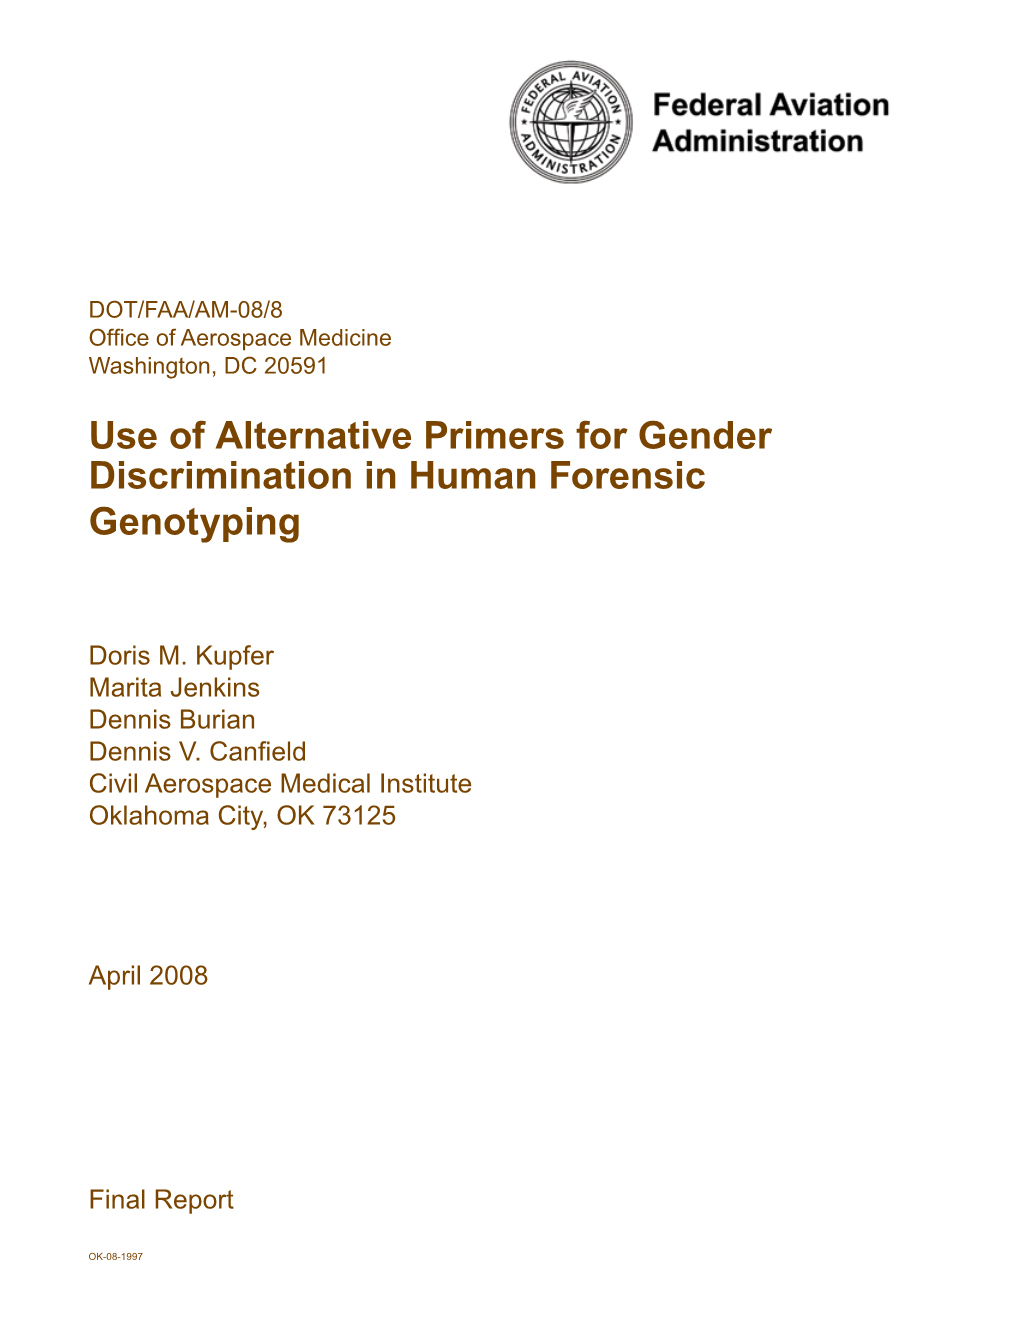 Use of Alternative Primers for Gender Discrimination in Human Forensic Genotyping